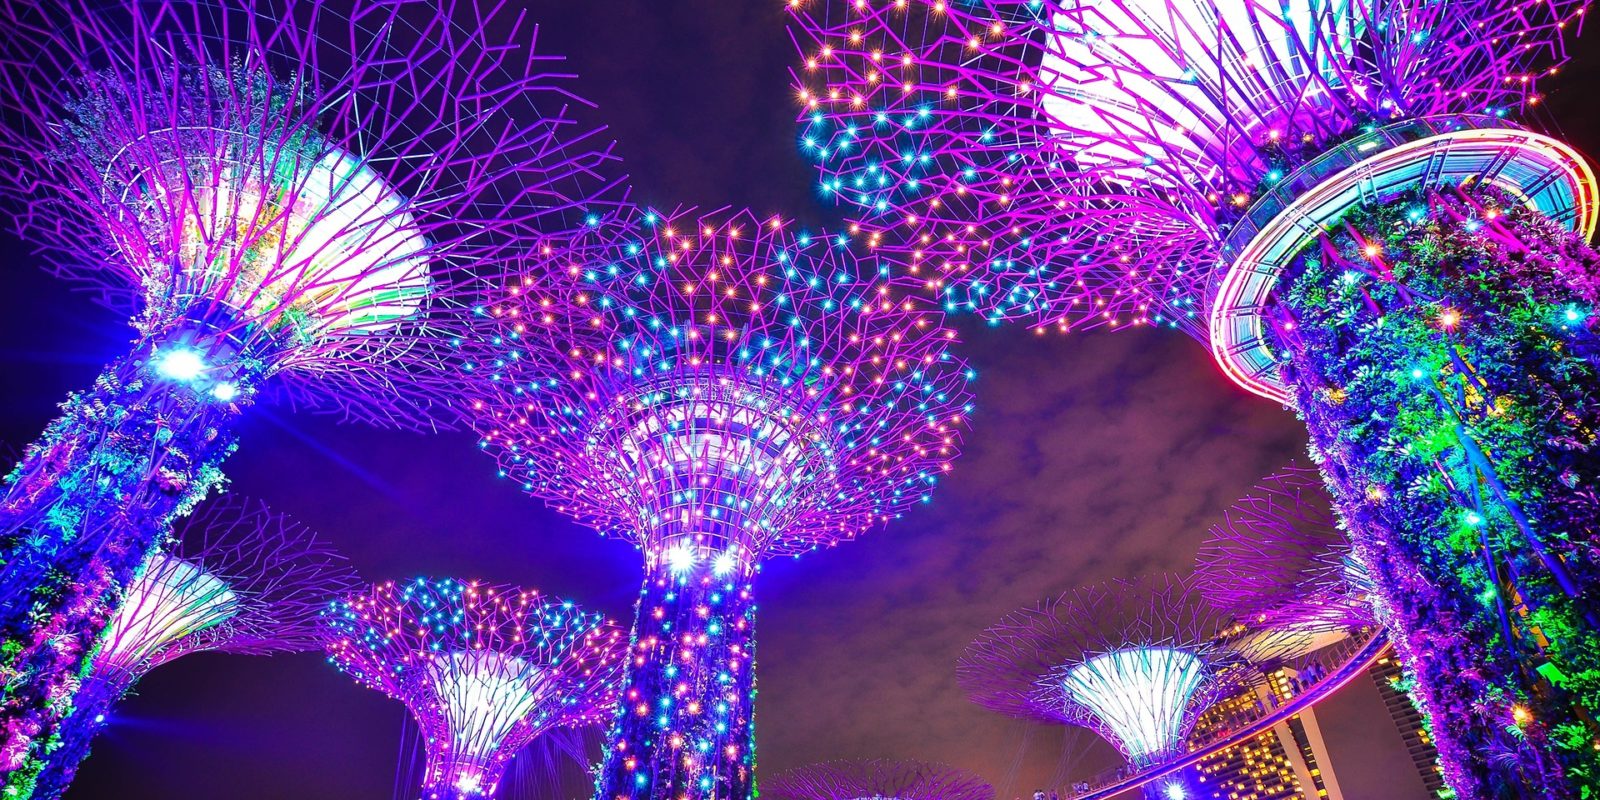 Illumination at Gardens by the Bay, Singapore.